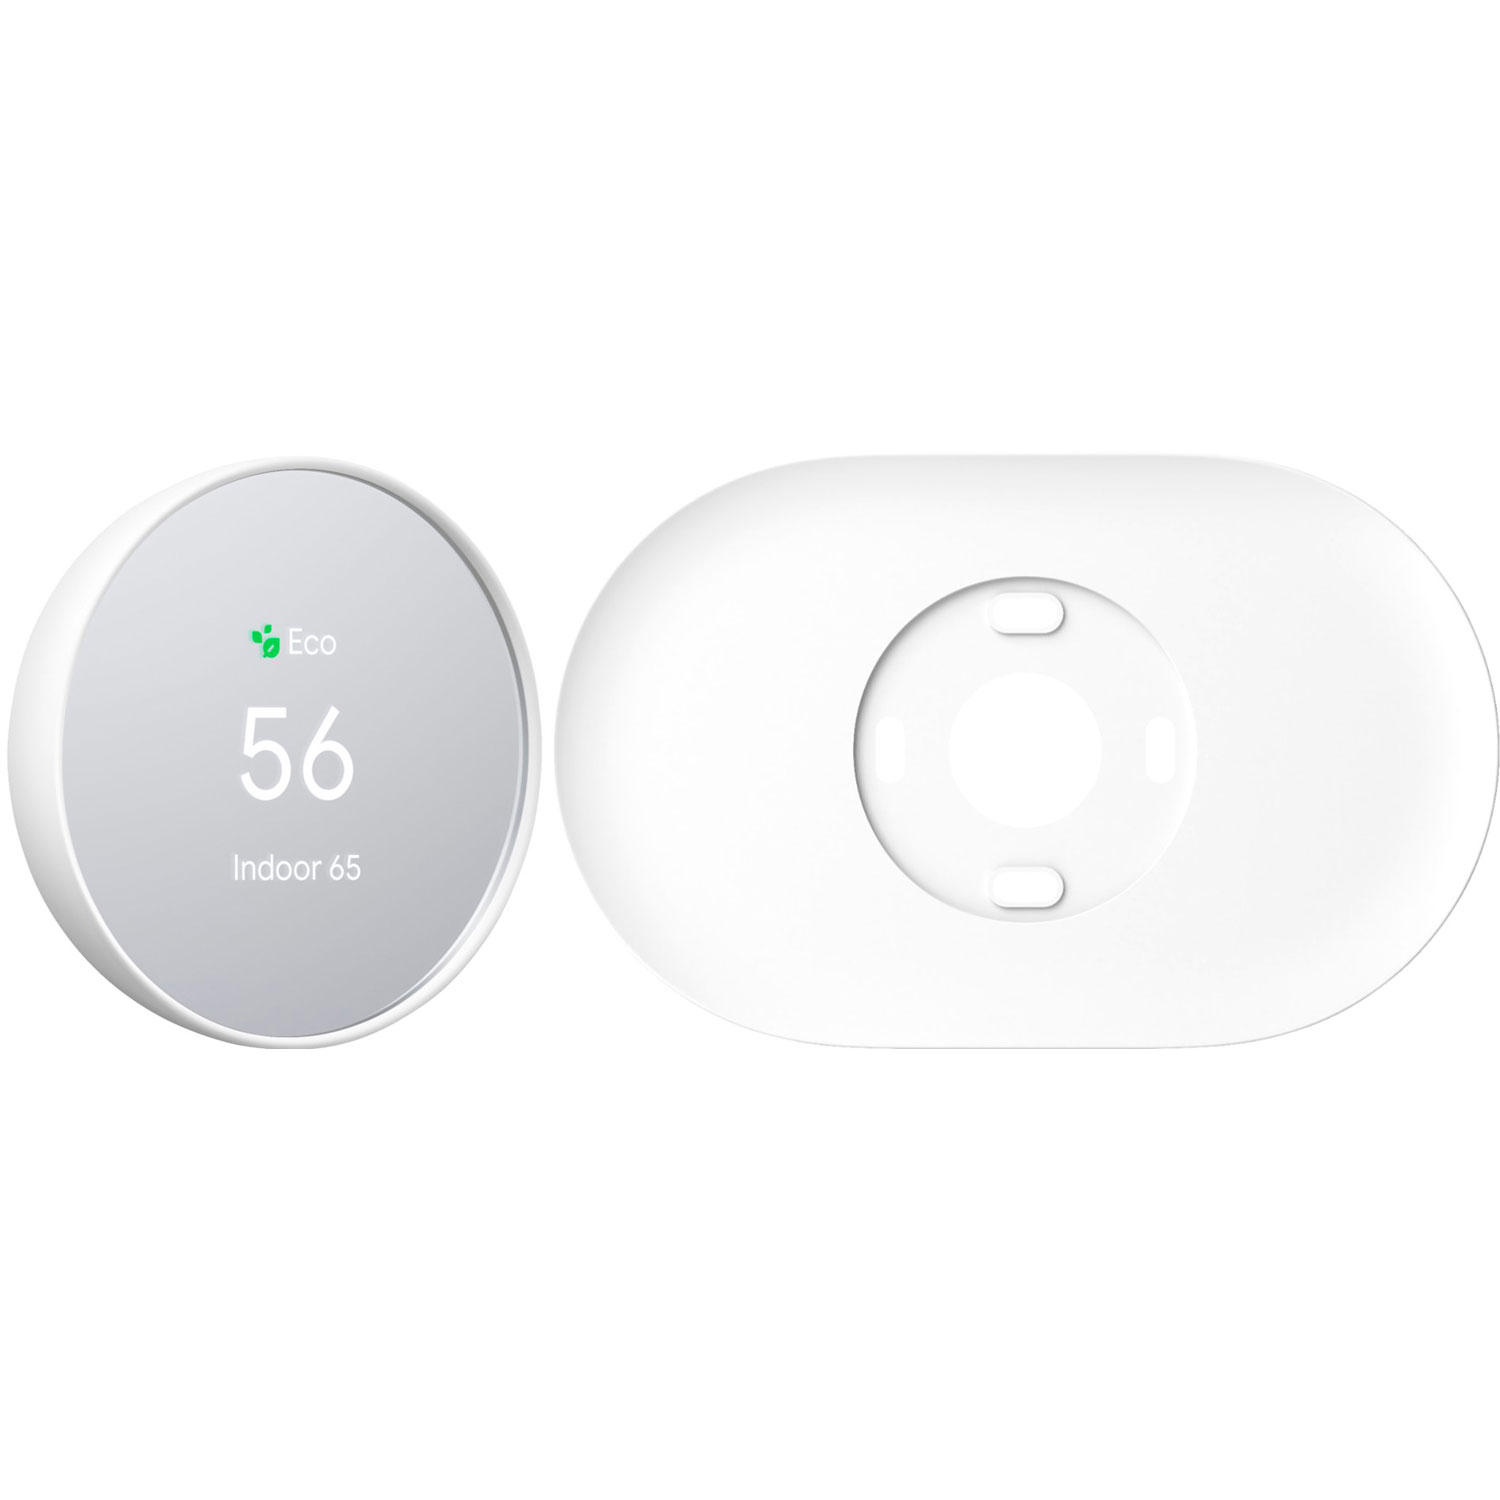 Save  on Google Nest Smart Thermostat with Bonus Trim Kit